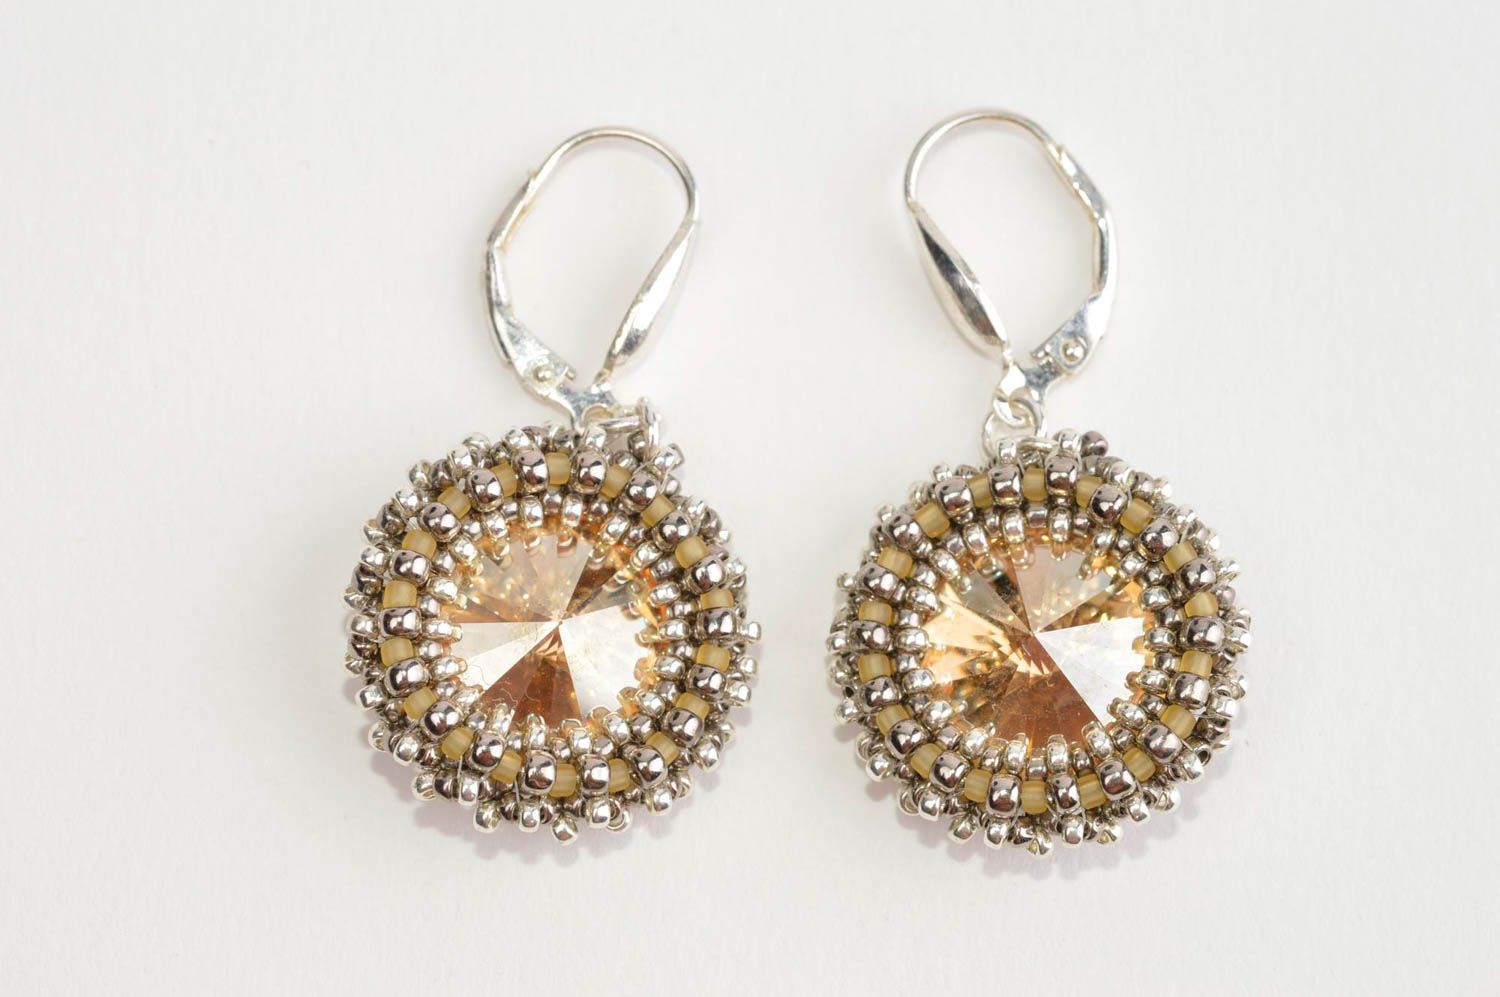 Handmade earrings with rhinestones shiny earrings evening earrings for women photo 2